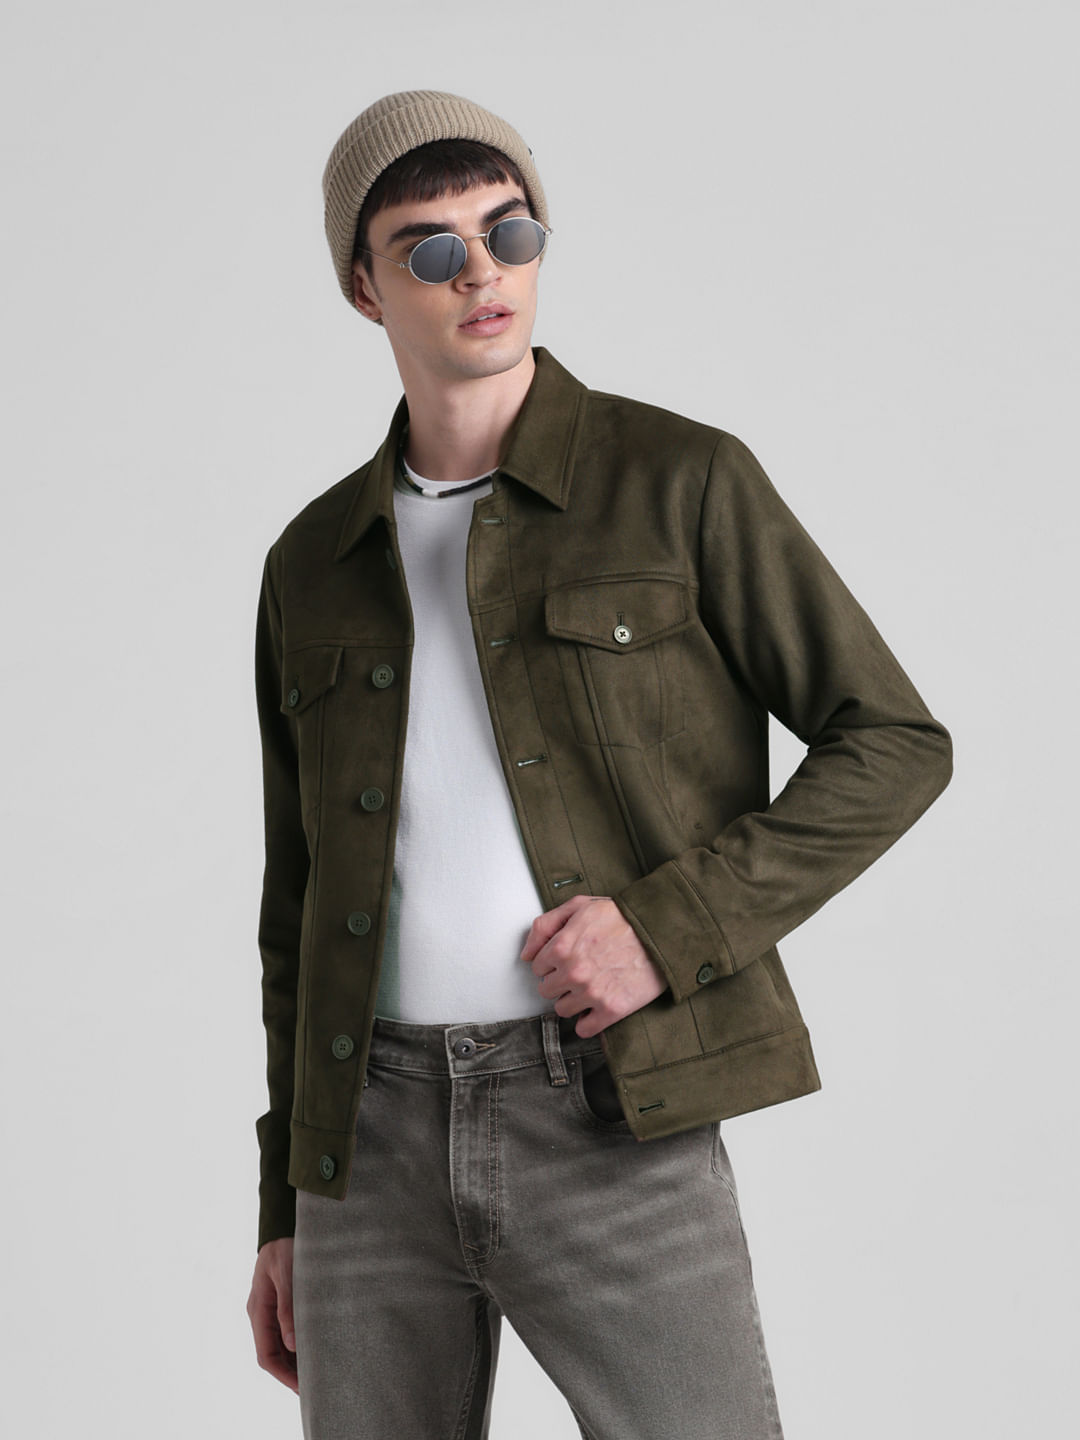 Mens Denim Jacket Coat Solid Color Classic Long Sleeve Casual Trucker  Outwear | eBay